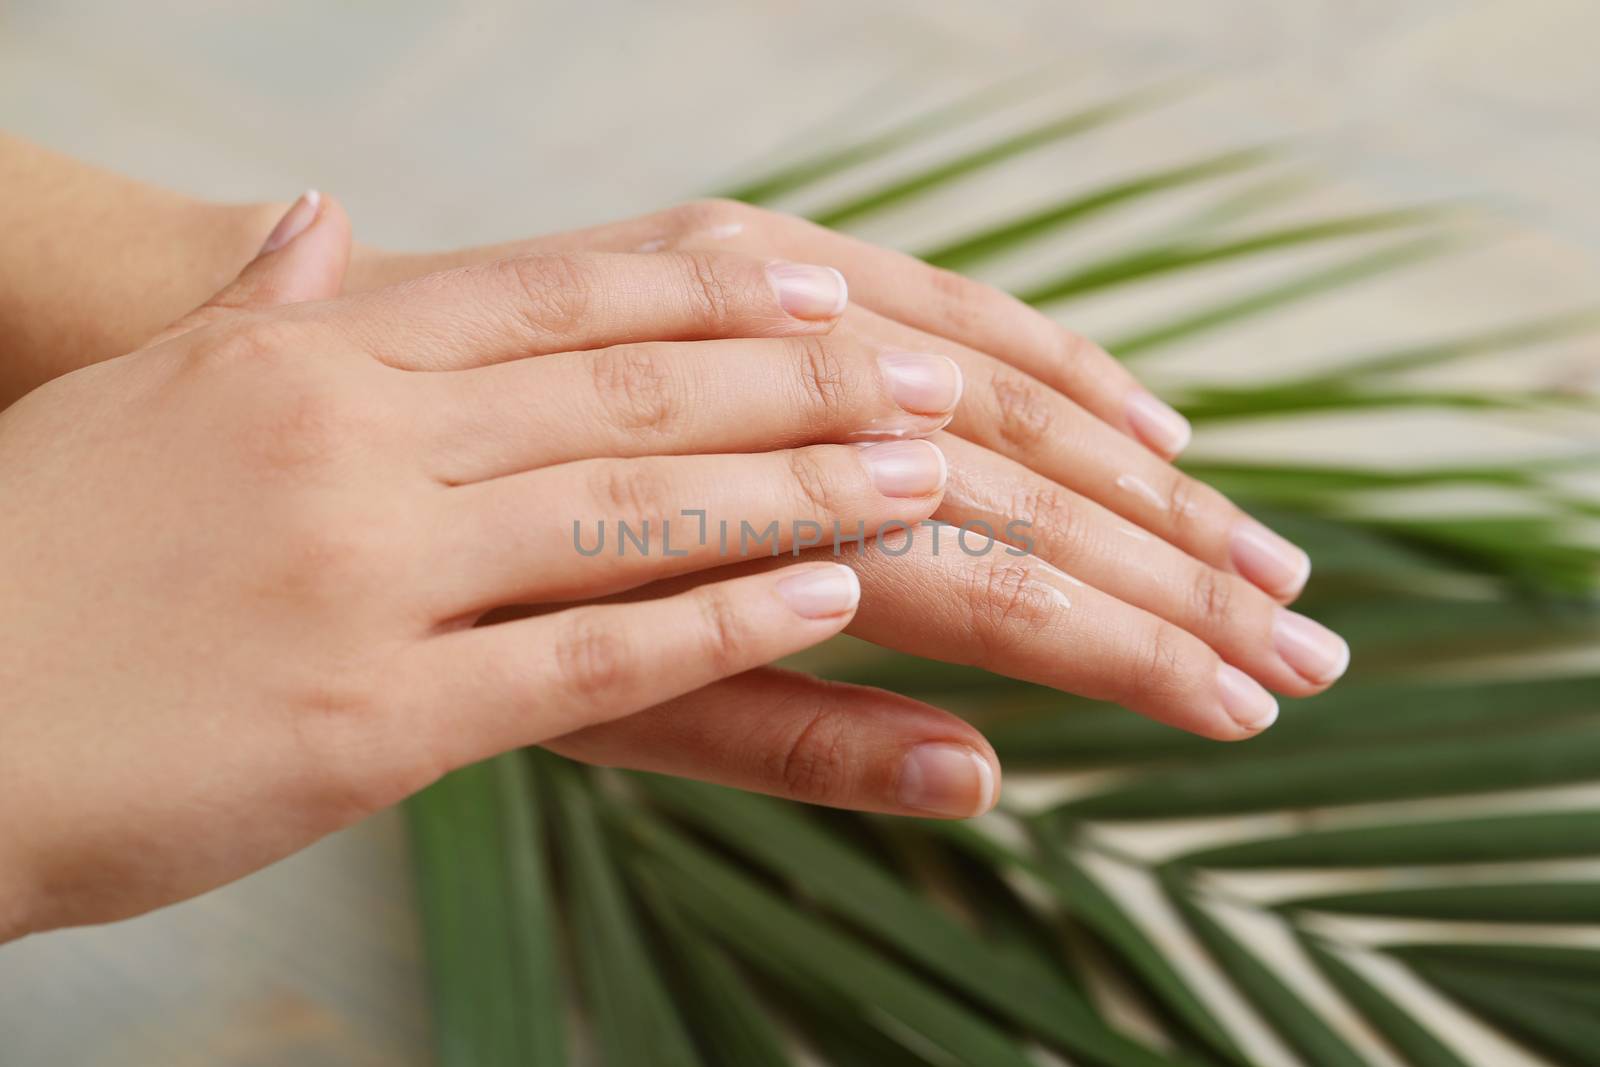 Skin care. Hands in close-up